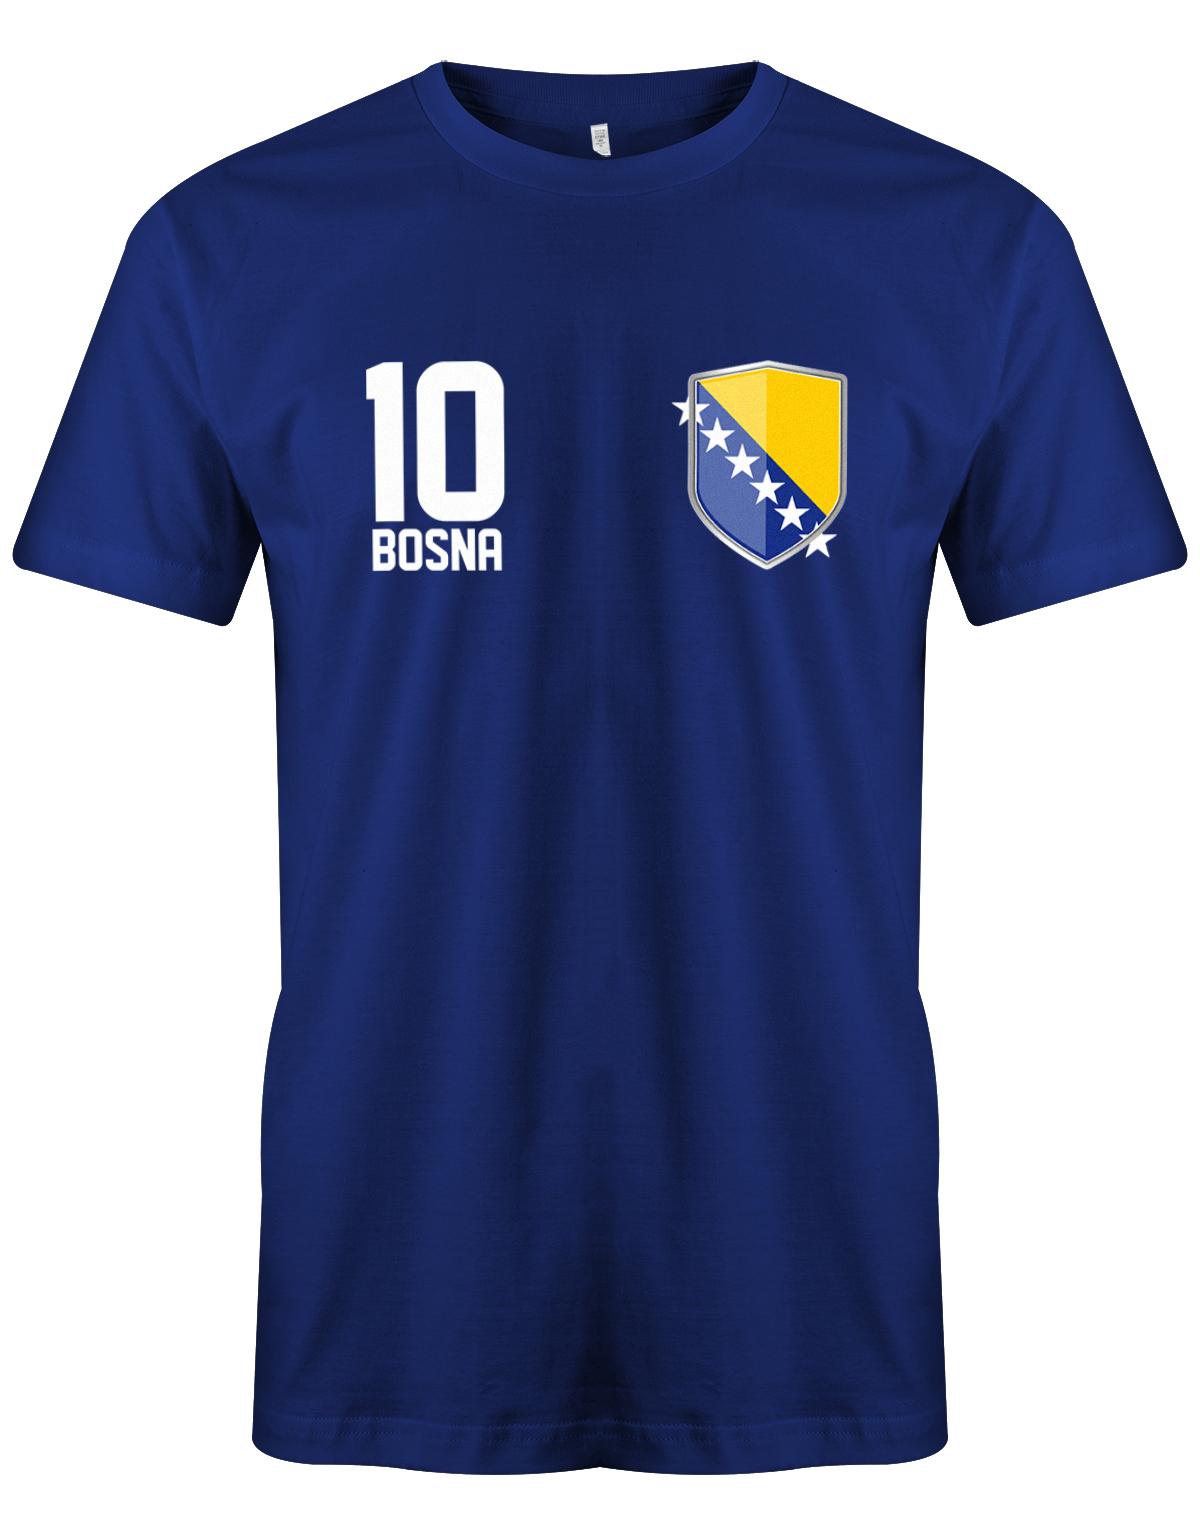 Bosna-Shirt-10-Herren-EM-Wm-Shirt-Royalblau